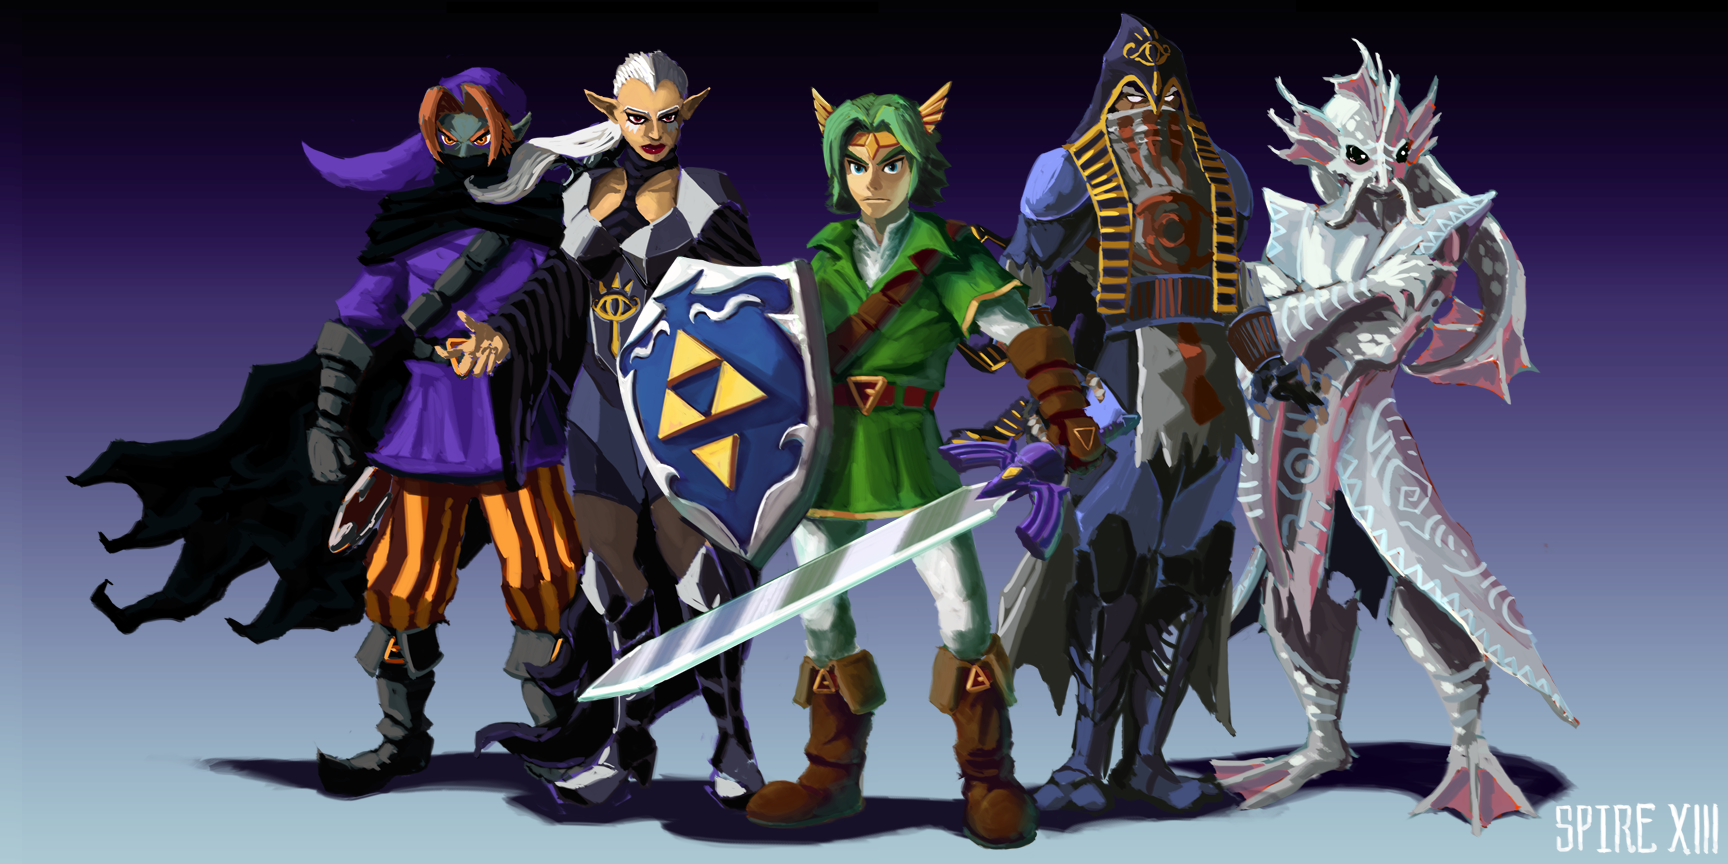 hardware (adult) image - Concept Sash/Baldric for Debug rom and 1.0 mod for  The Legend of Zelda: Ocarina of Time - ModDB